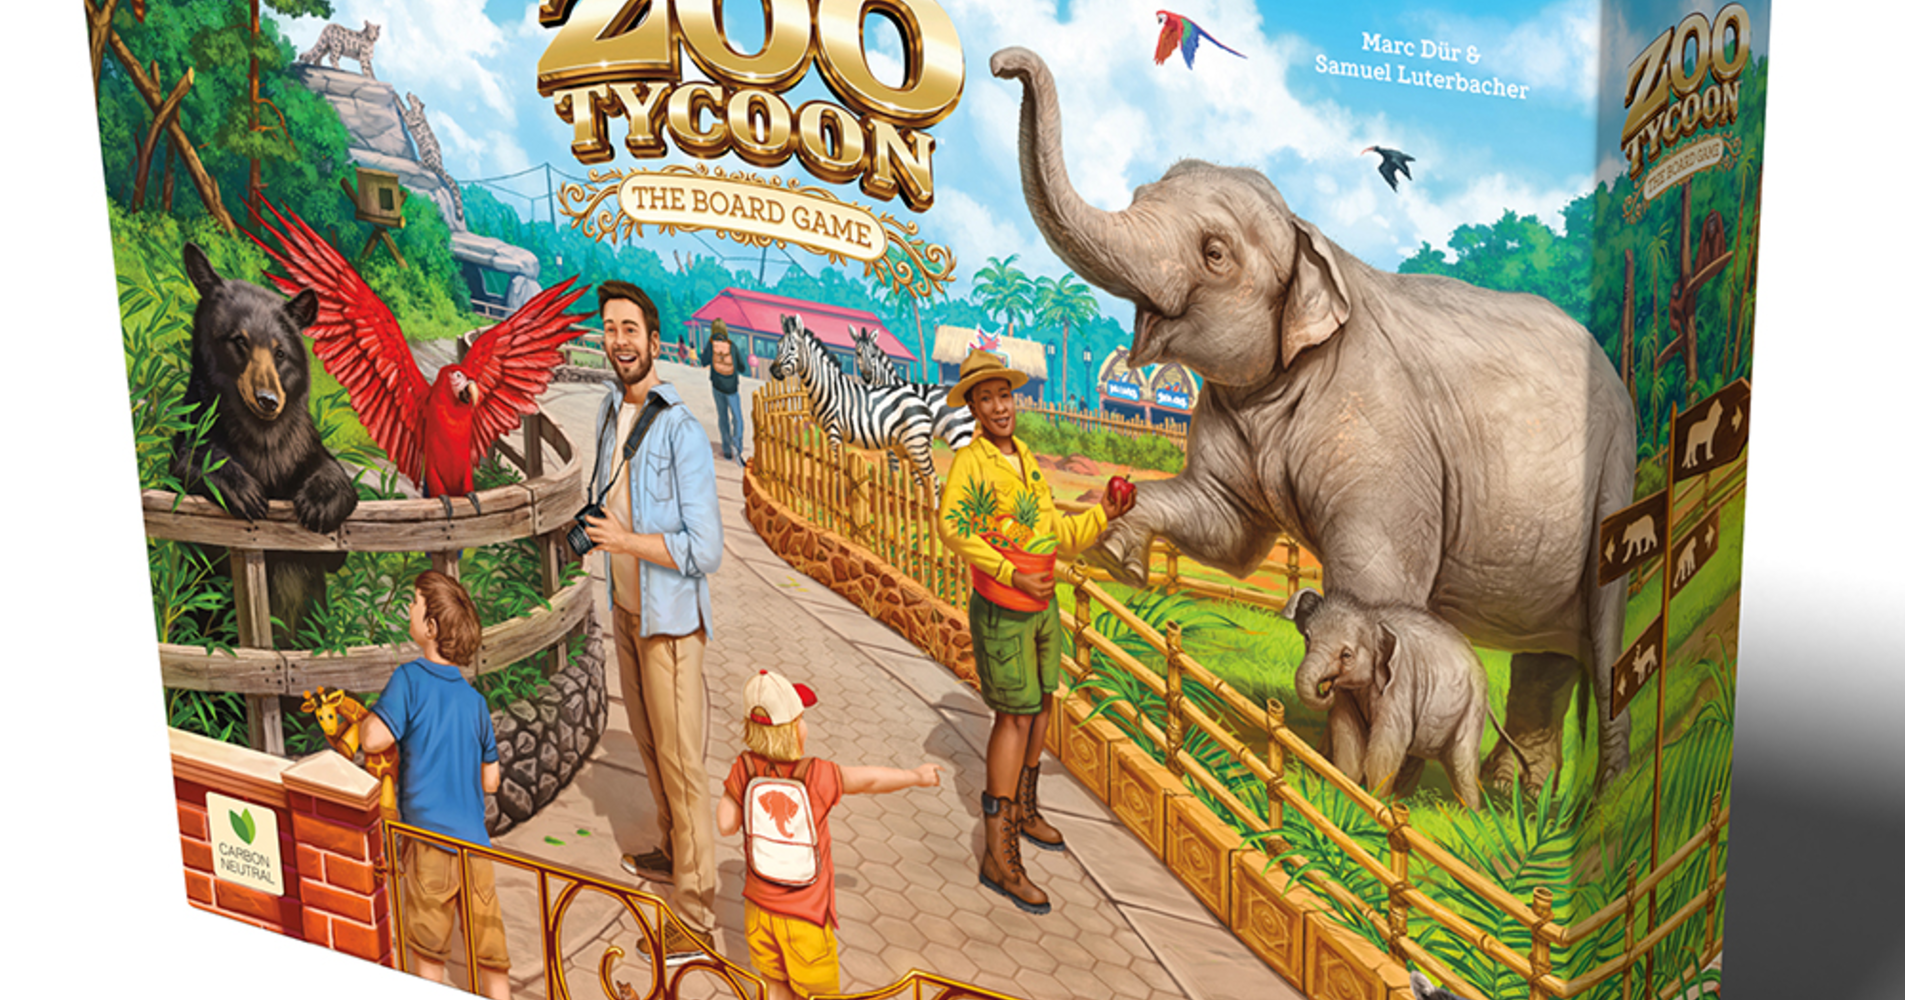 Zoo Tycoon: The Board Game KICKSTARTER by ShadeofShinon on DeviantArt